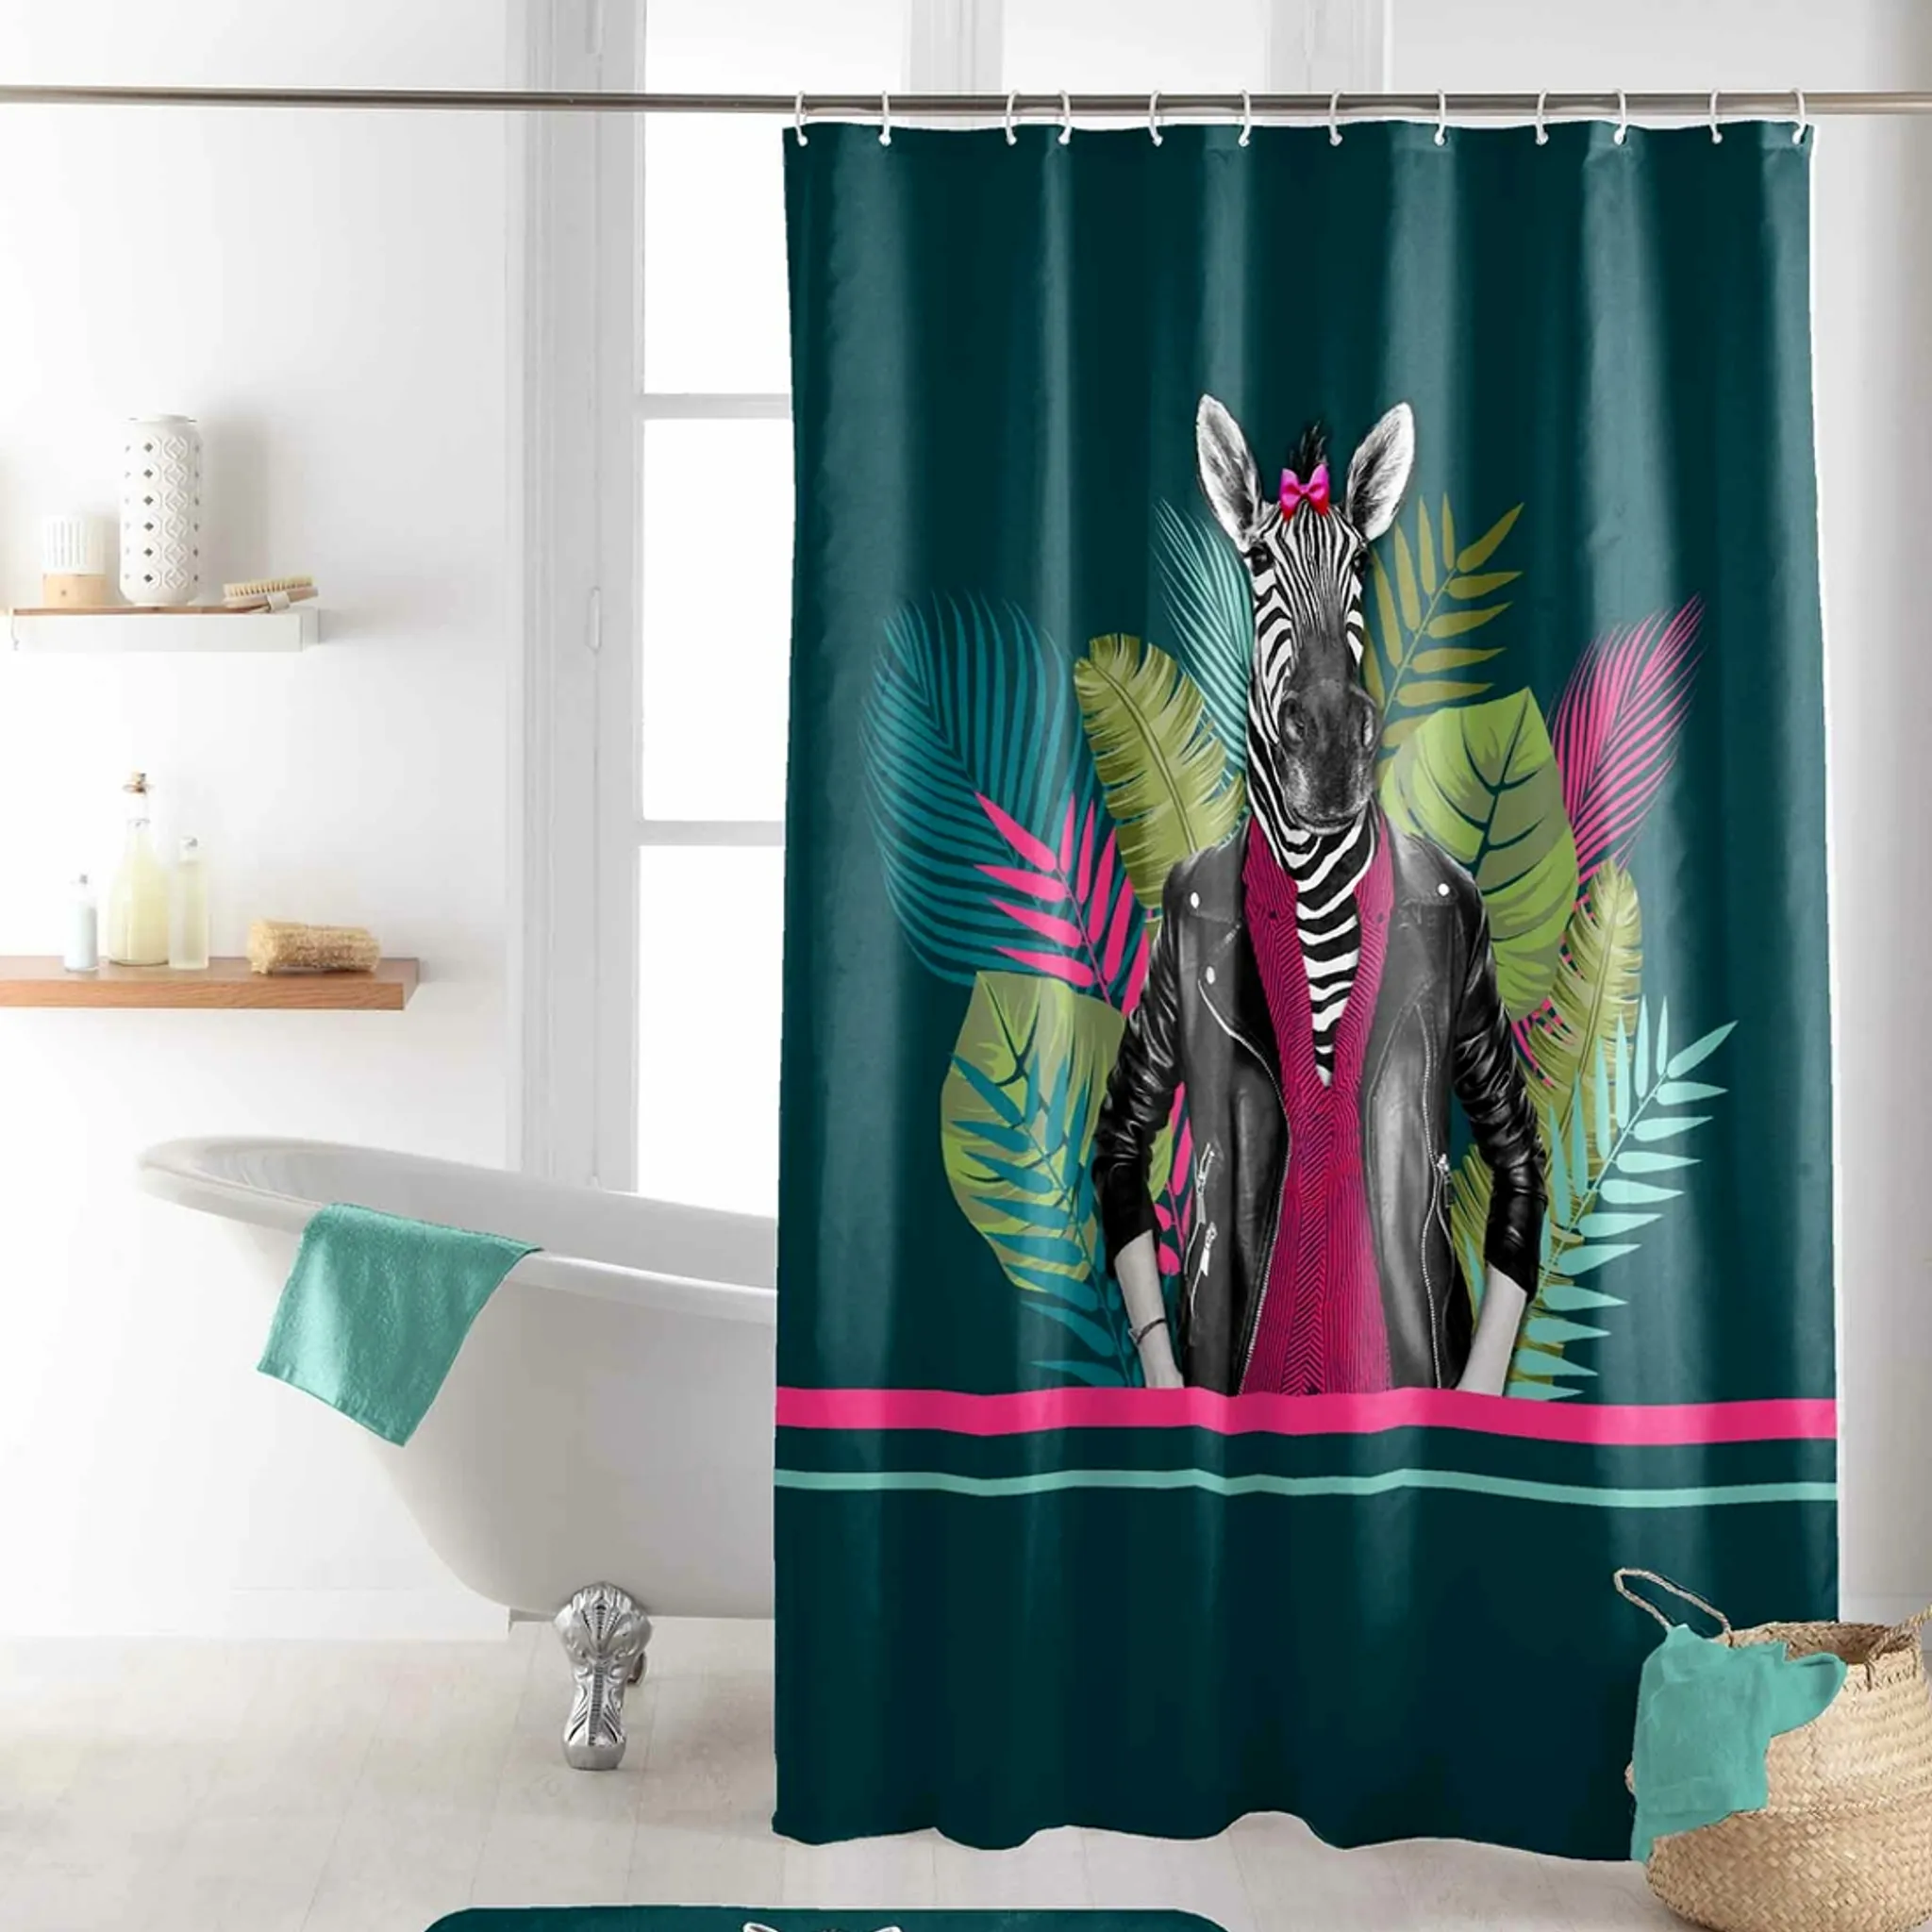 Textil Duschvorhang cooles Zebra grün 180x200 Garten & Heimwerken Baumarkt Badausstattung Duschvorhänge 